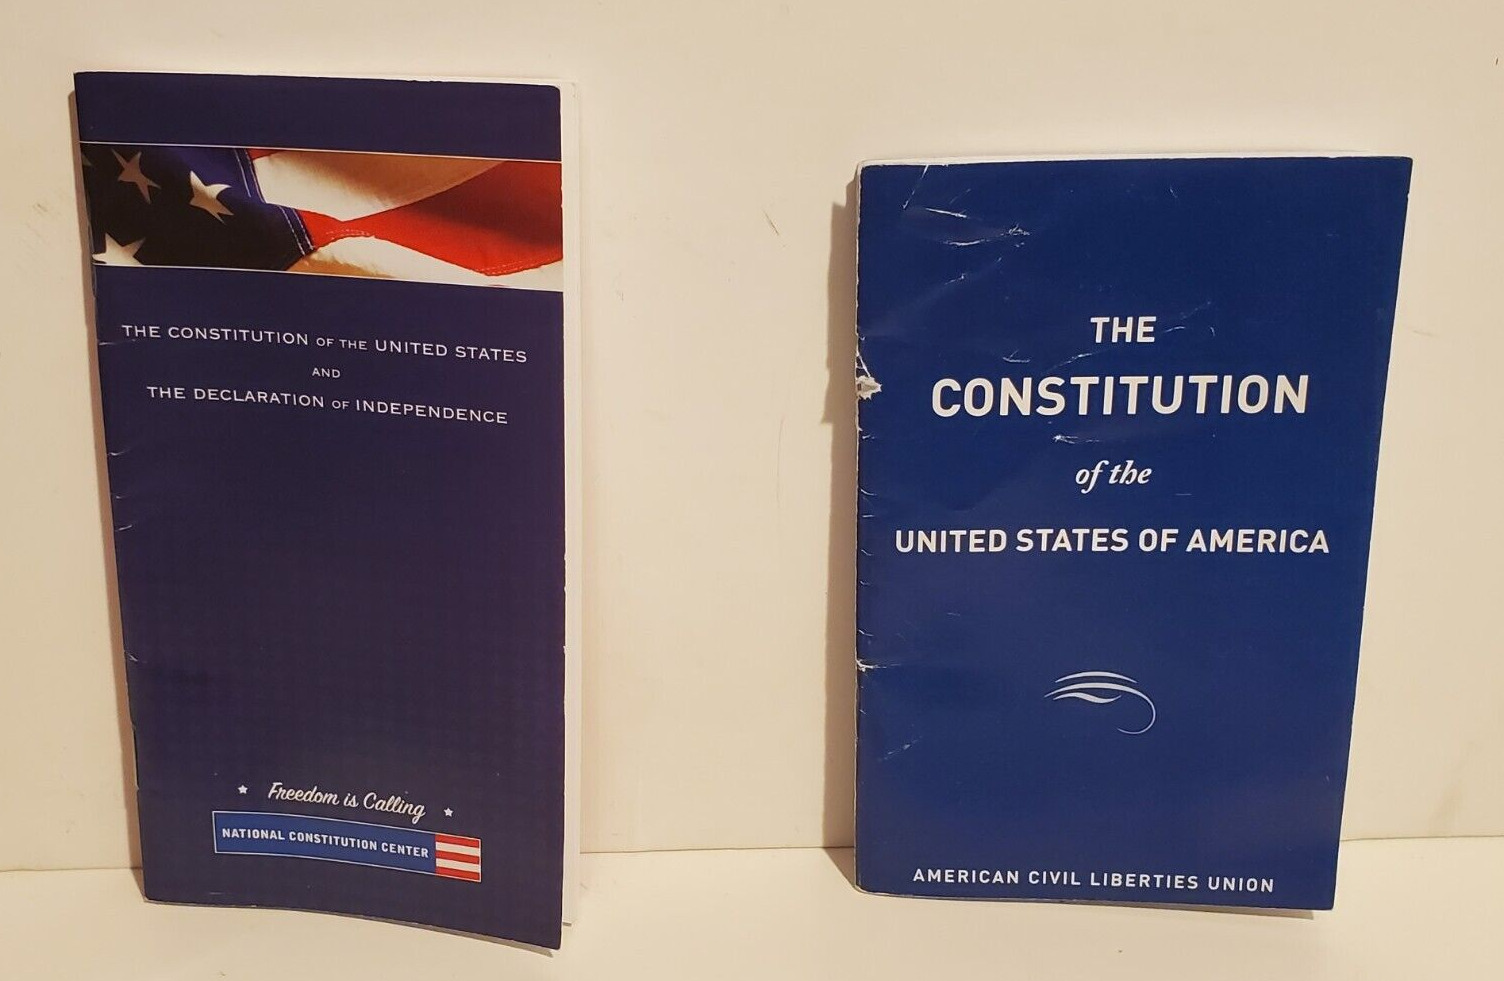 ALCU AMERICAN CIVIL LIBERTIES UNION NATIONAL CONSTITUTION CENTER POCKET BOOKLETS